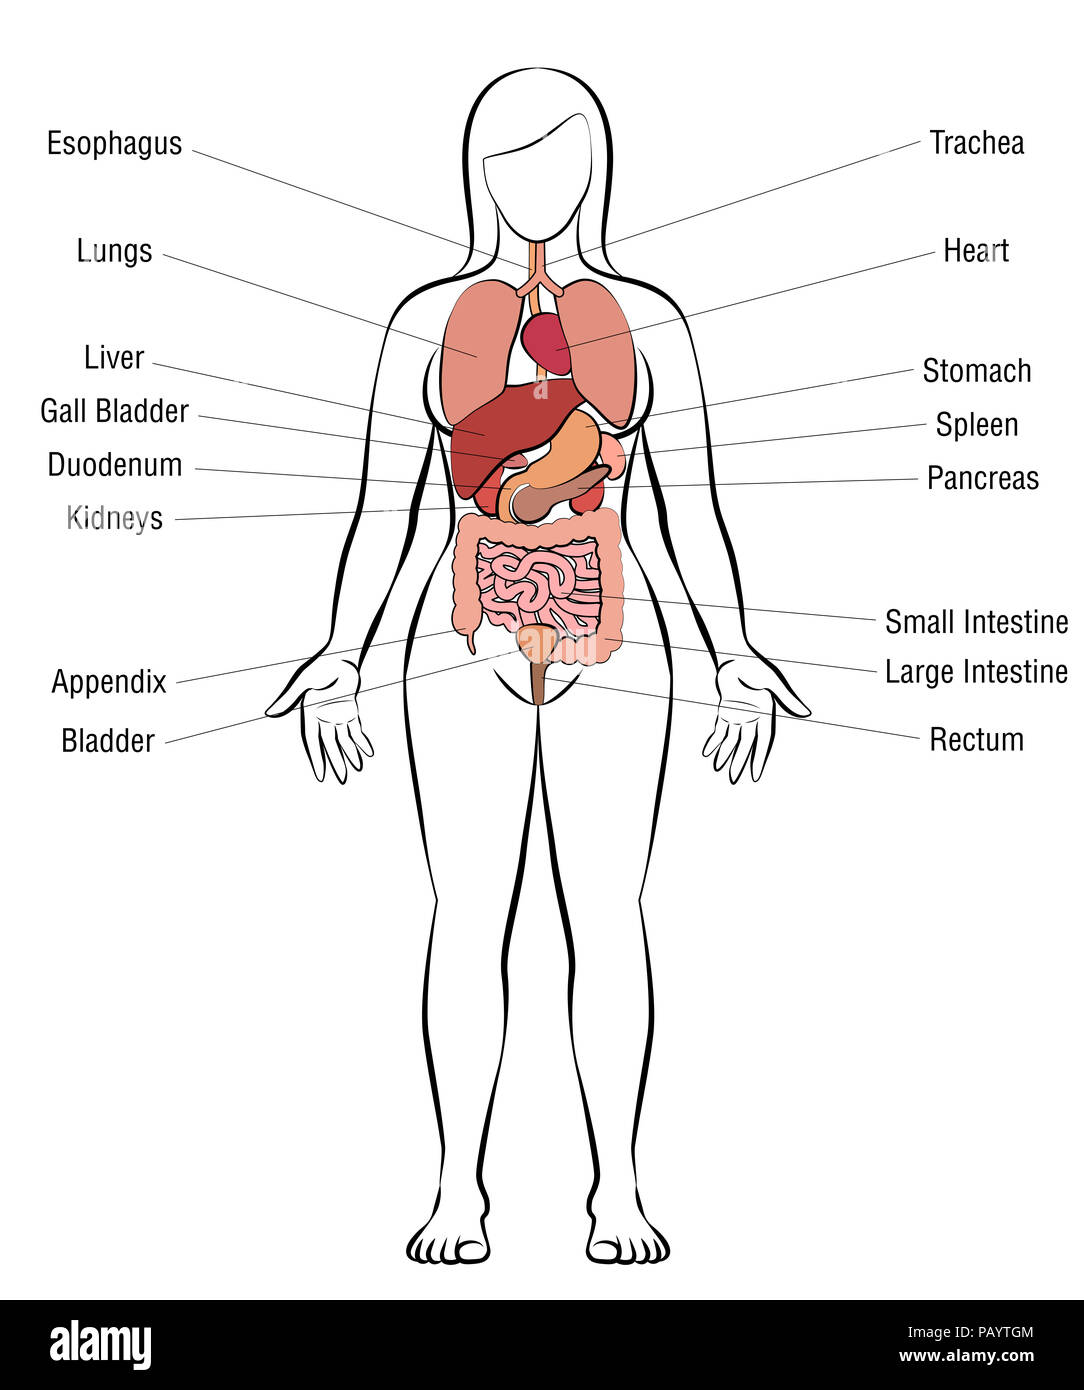 Internal Organs Female Body Schematic Human Anatomy Illustration On White Background Stock Photo Alamy